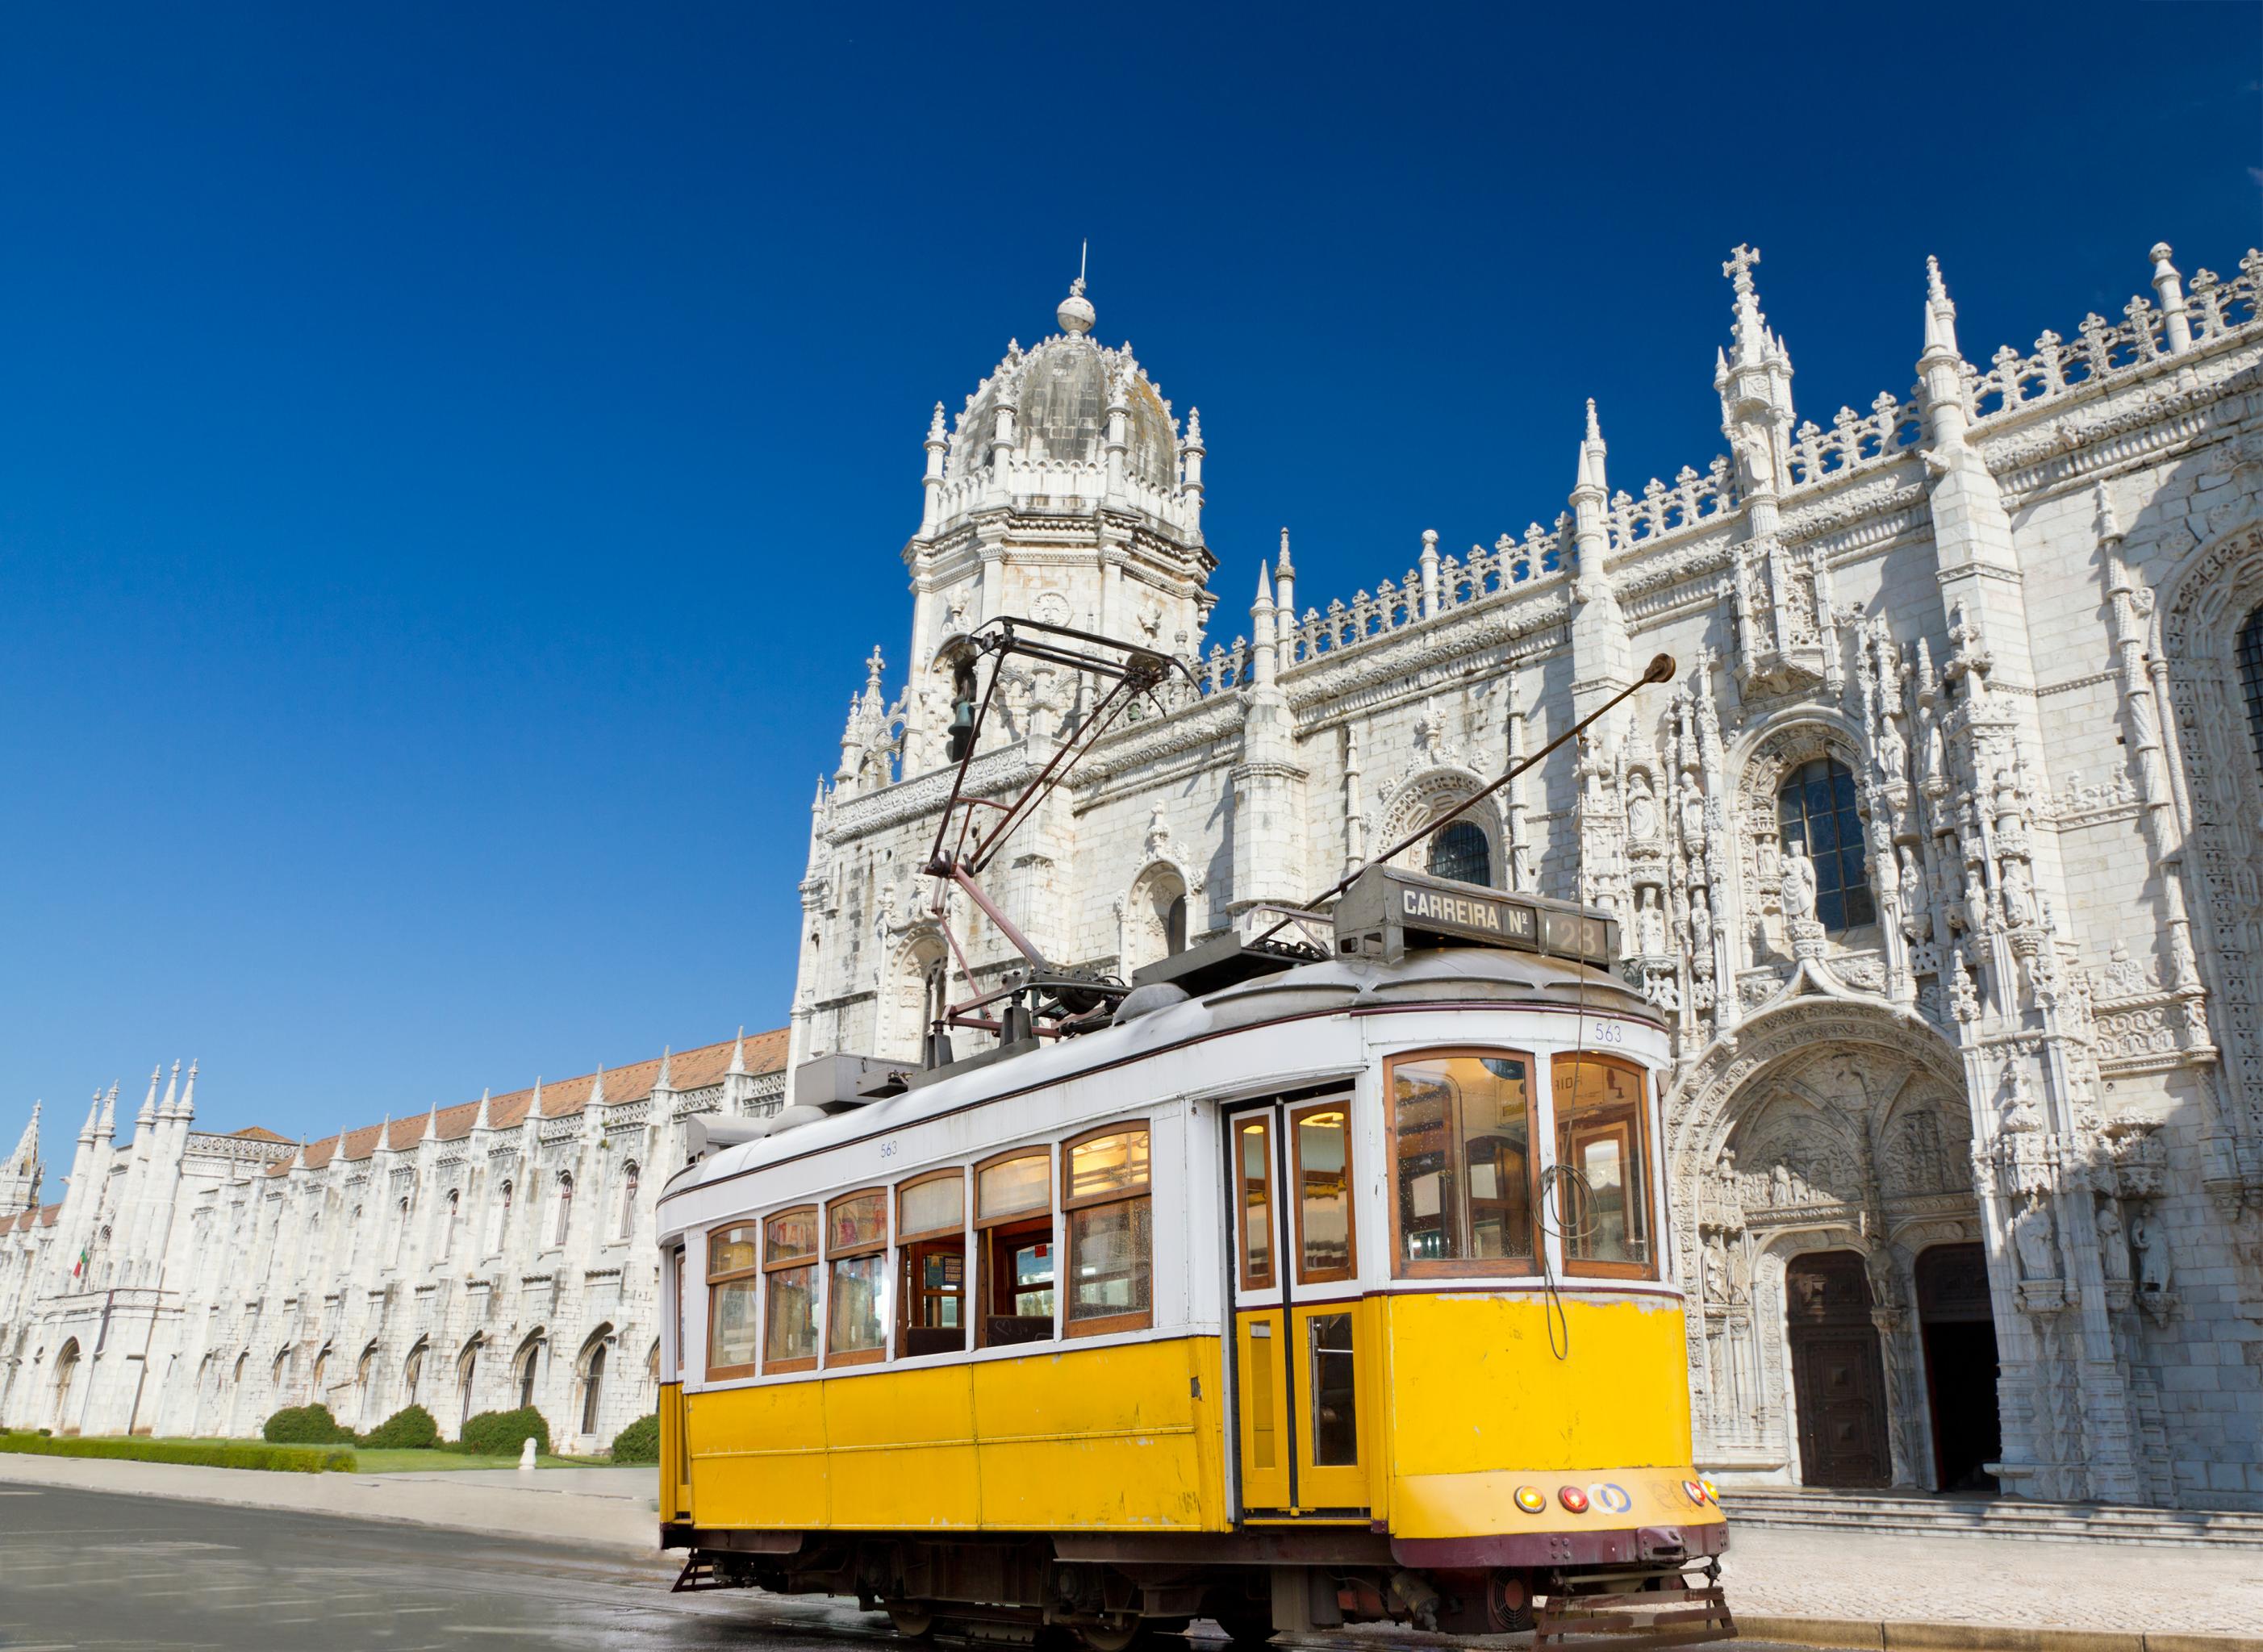 Lisboa_Jeronimos monastery_shutterstock_92182423.jpg